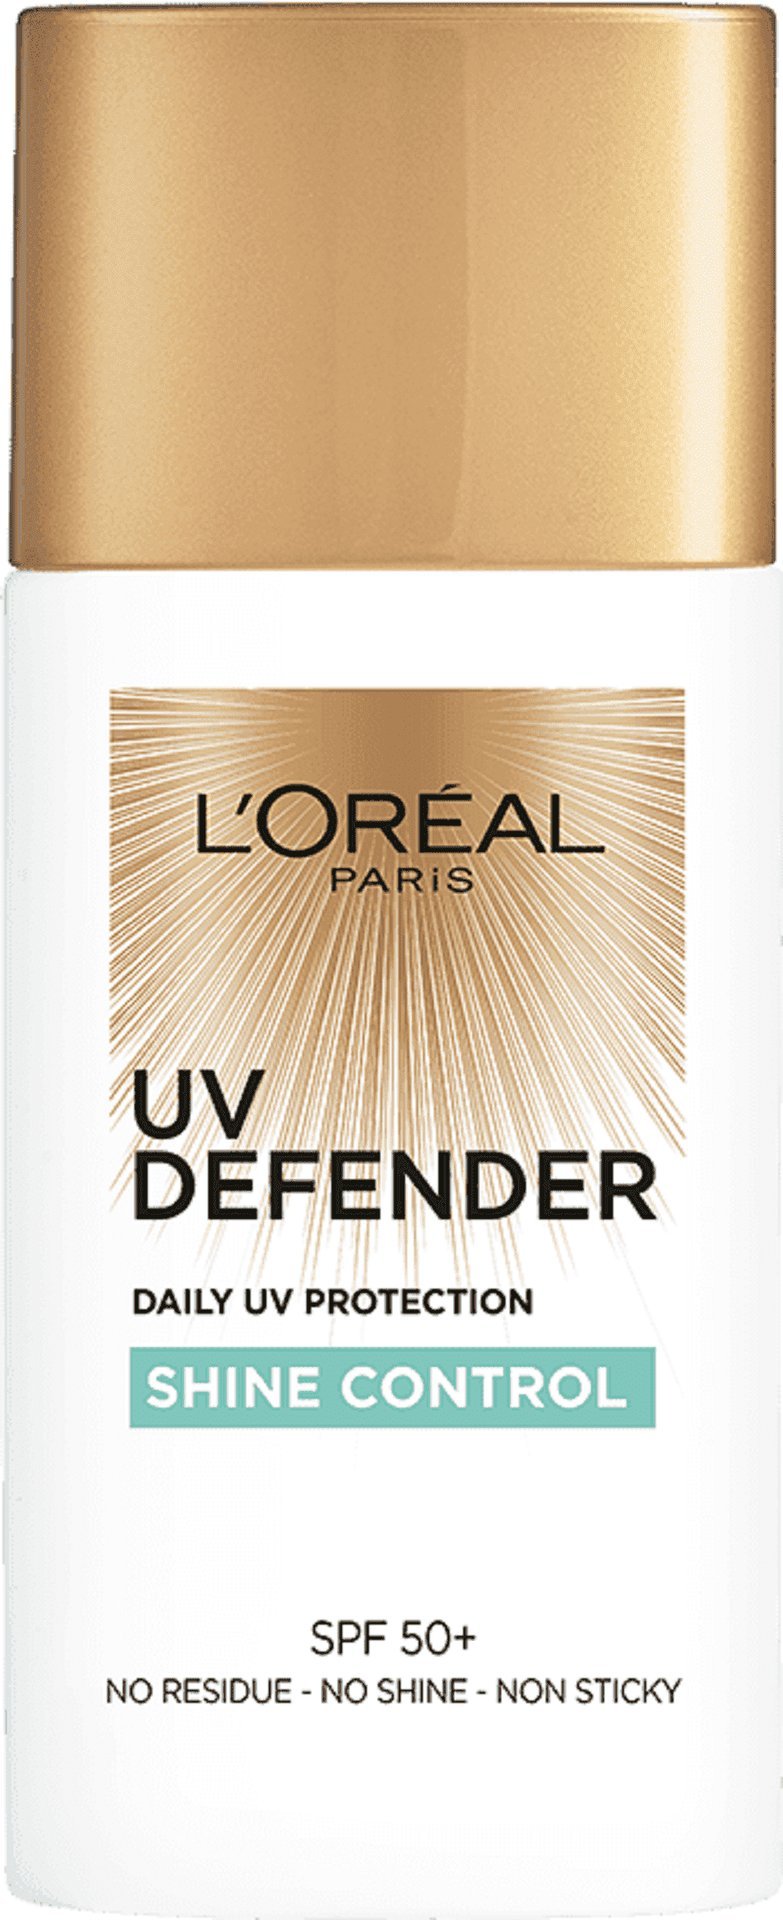 UV Defender: Shine Control | L'Oreal Paris